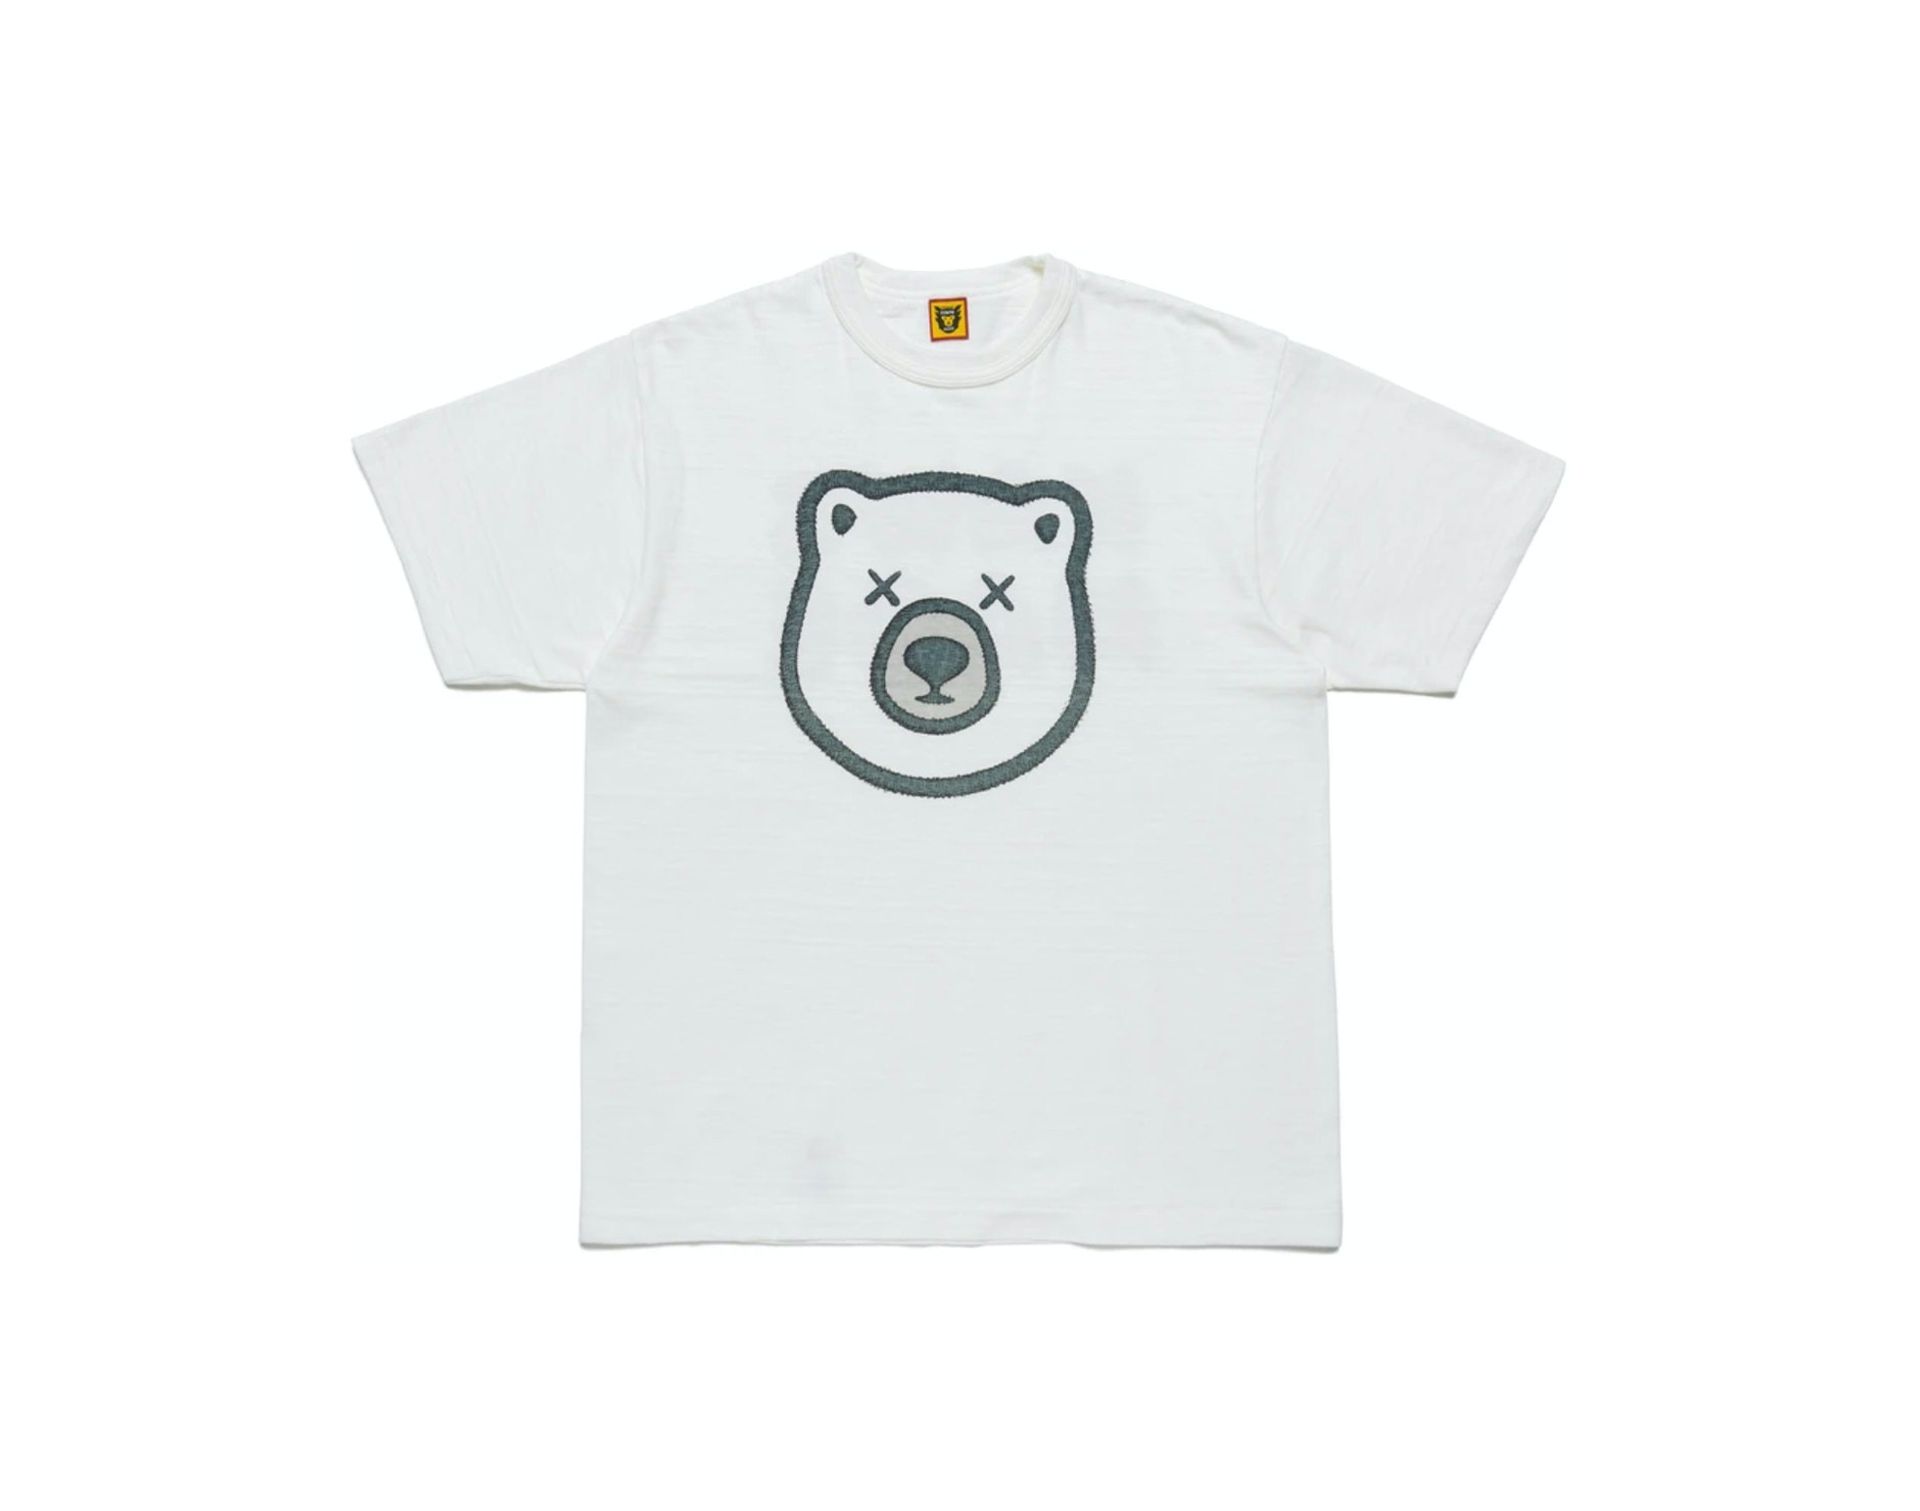 KAWS x Human Made #5 'Bear' Tee White - KHM5BTW | Ox Street